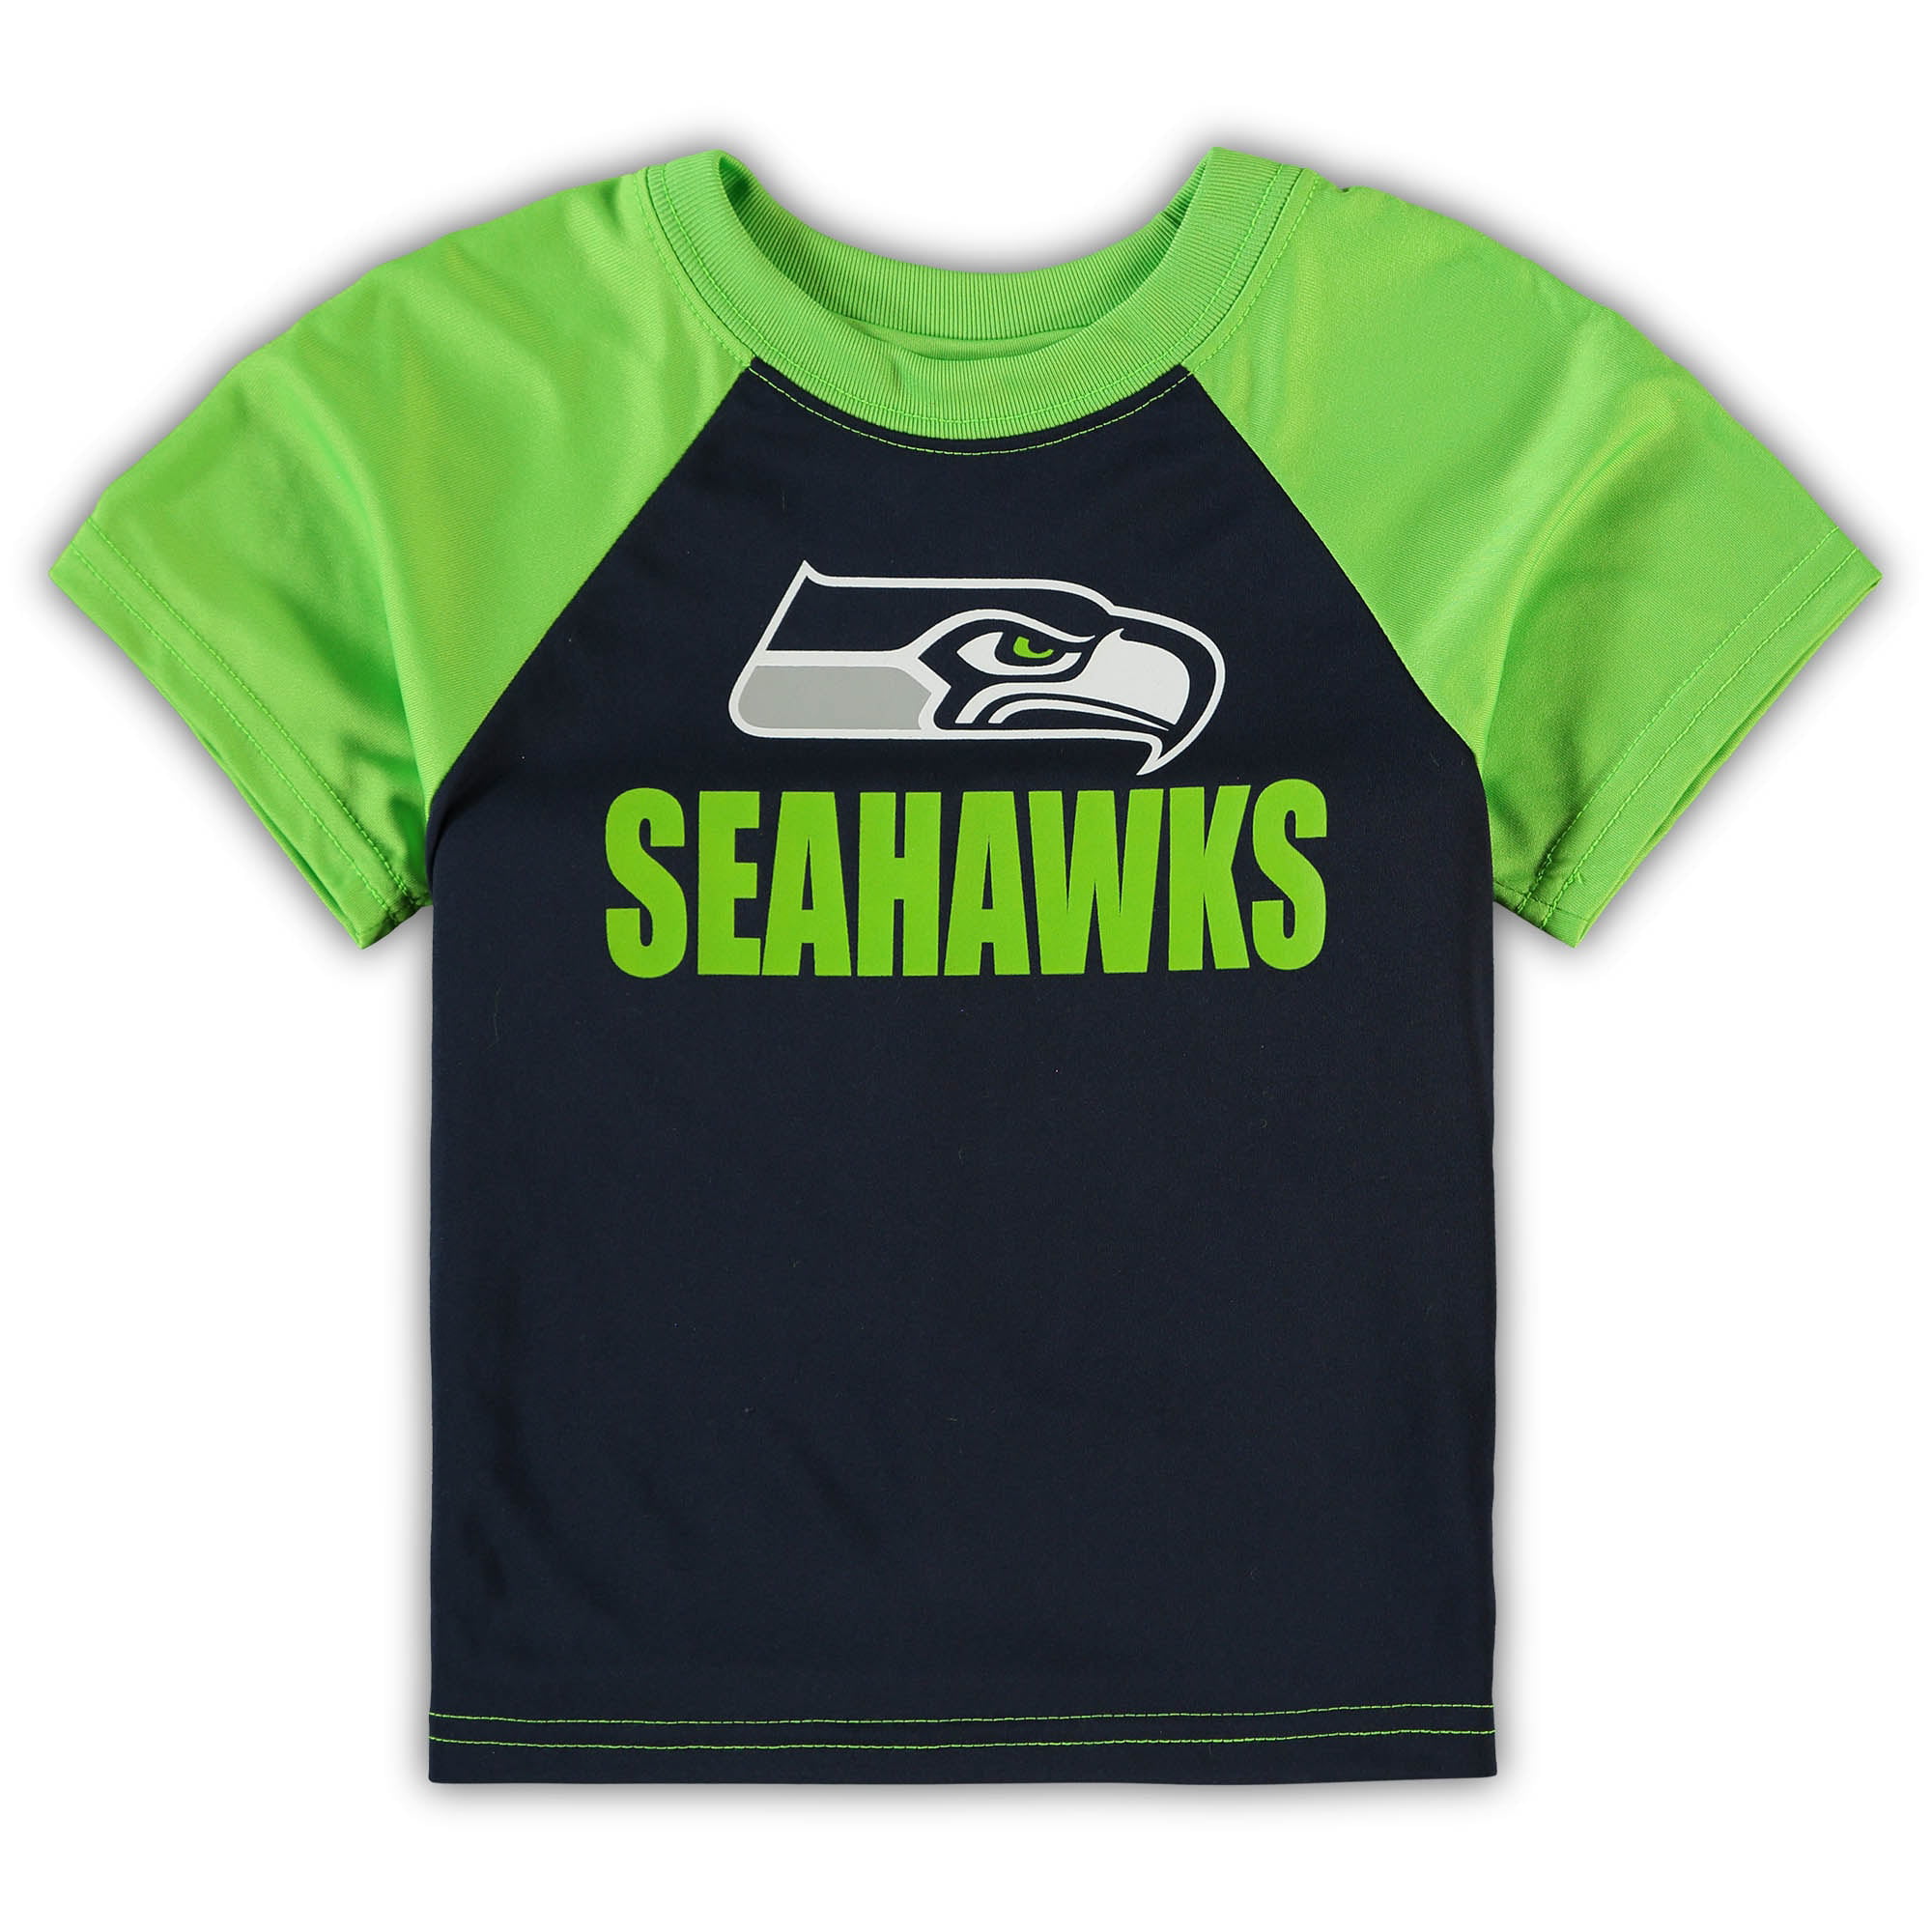 XL Got Seattle Kids Tee Shirt Pick Size & Color 2T 